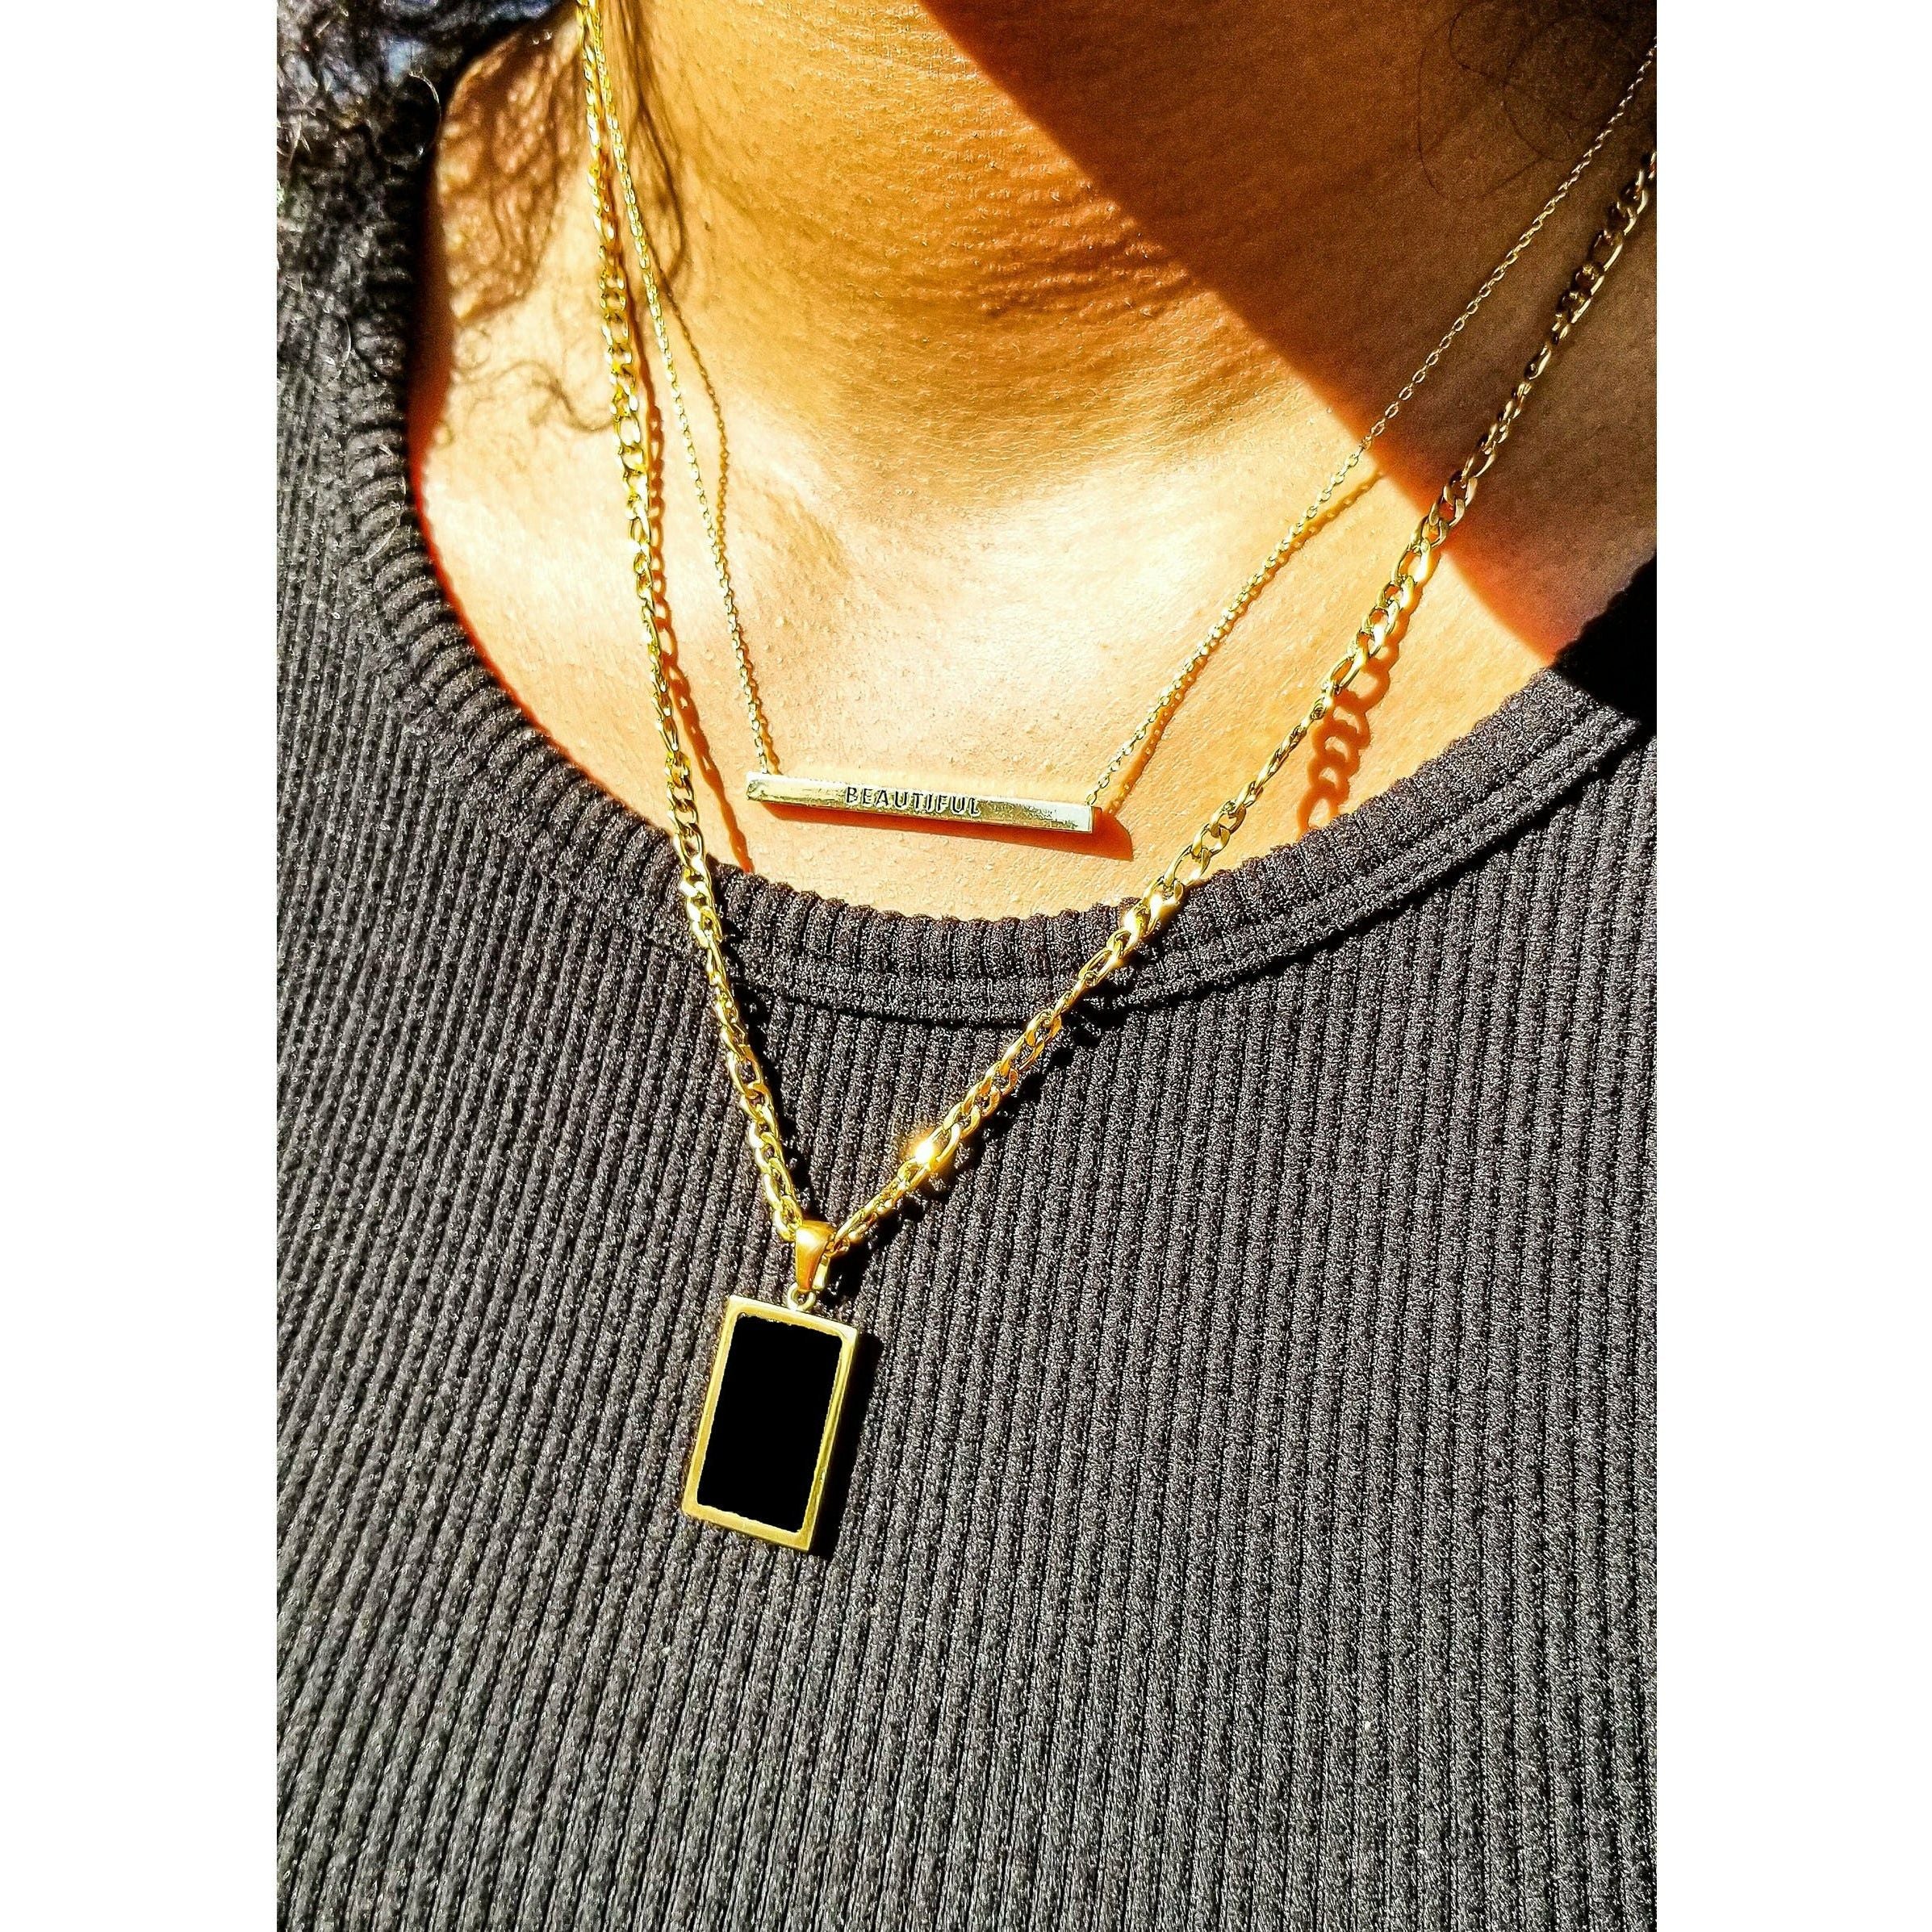 Black Onyx 14K Gold Pendant Necklace